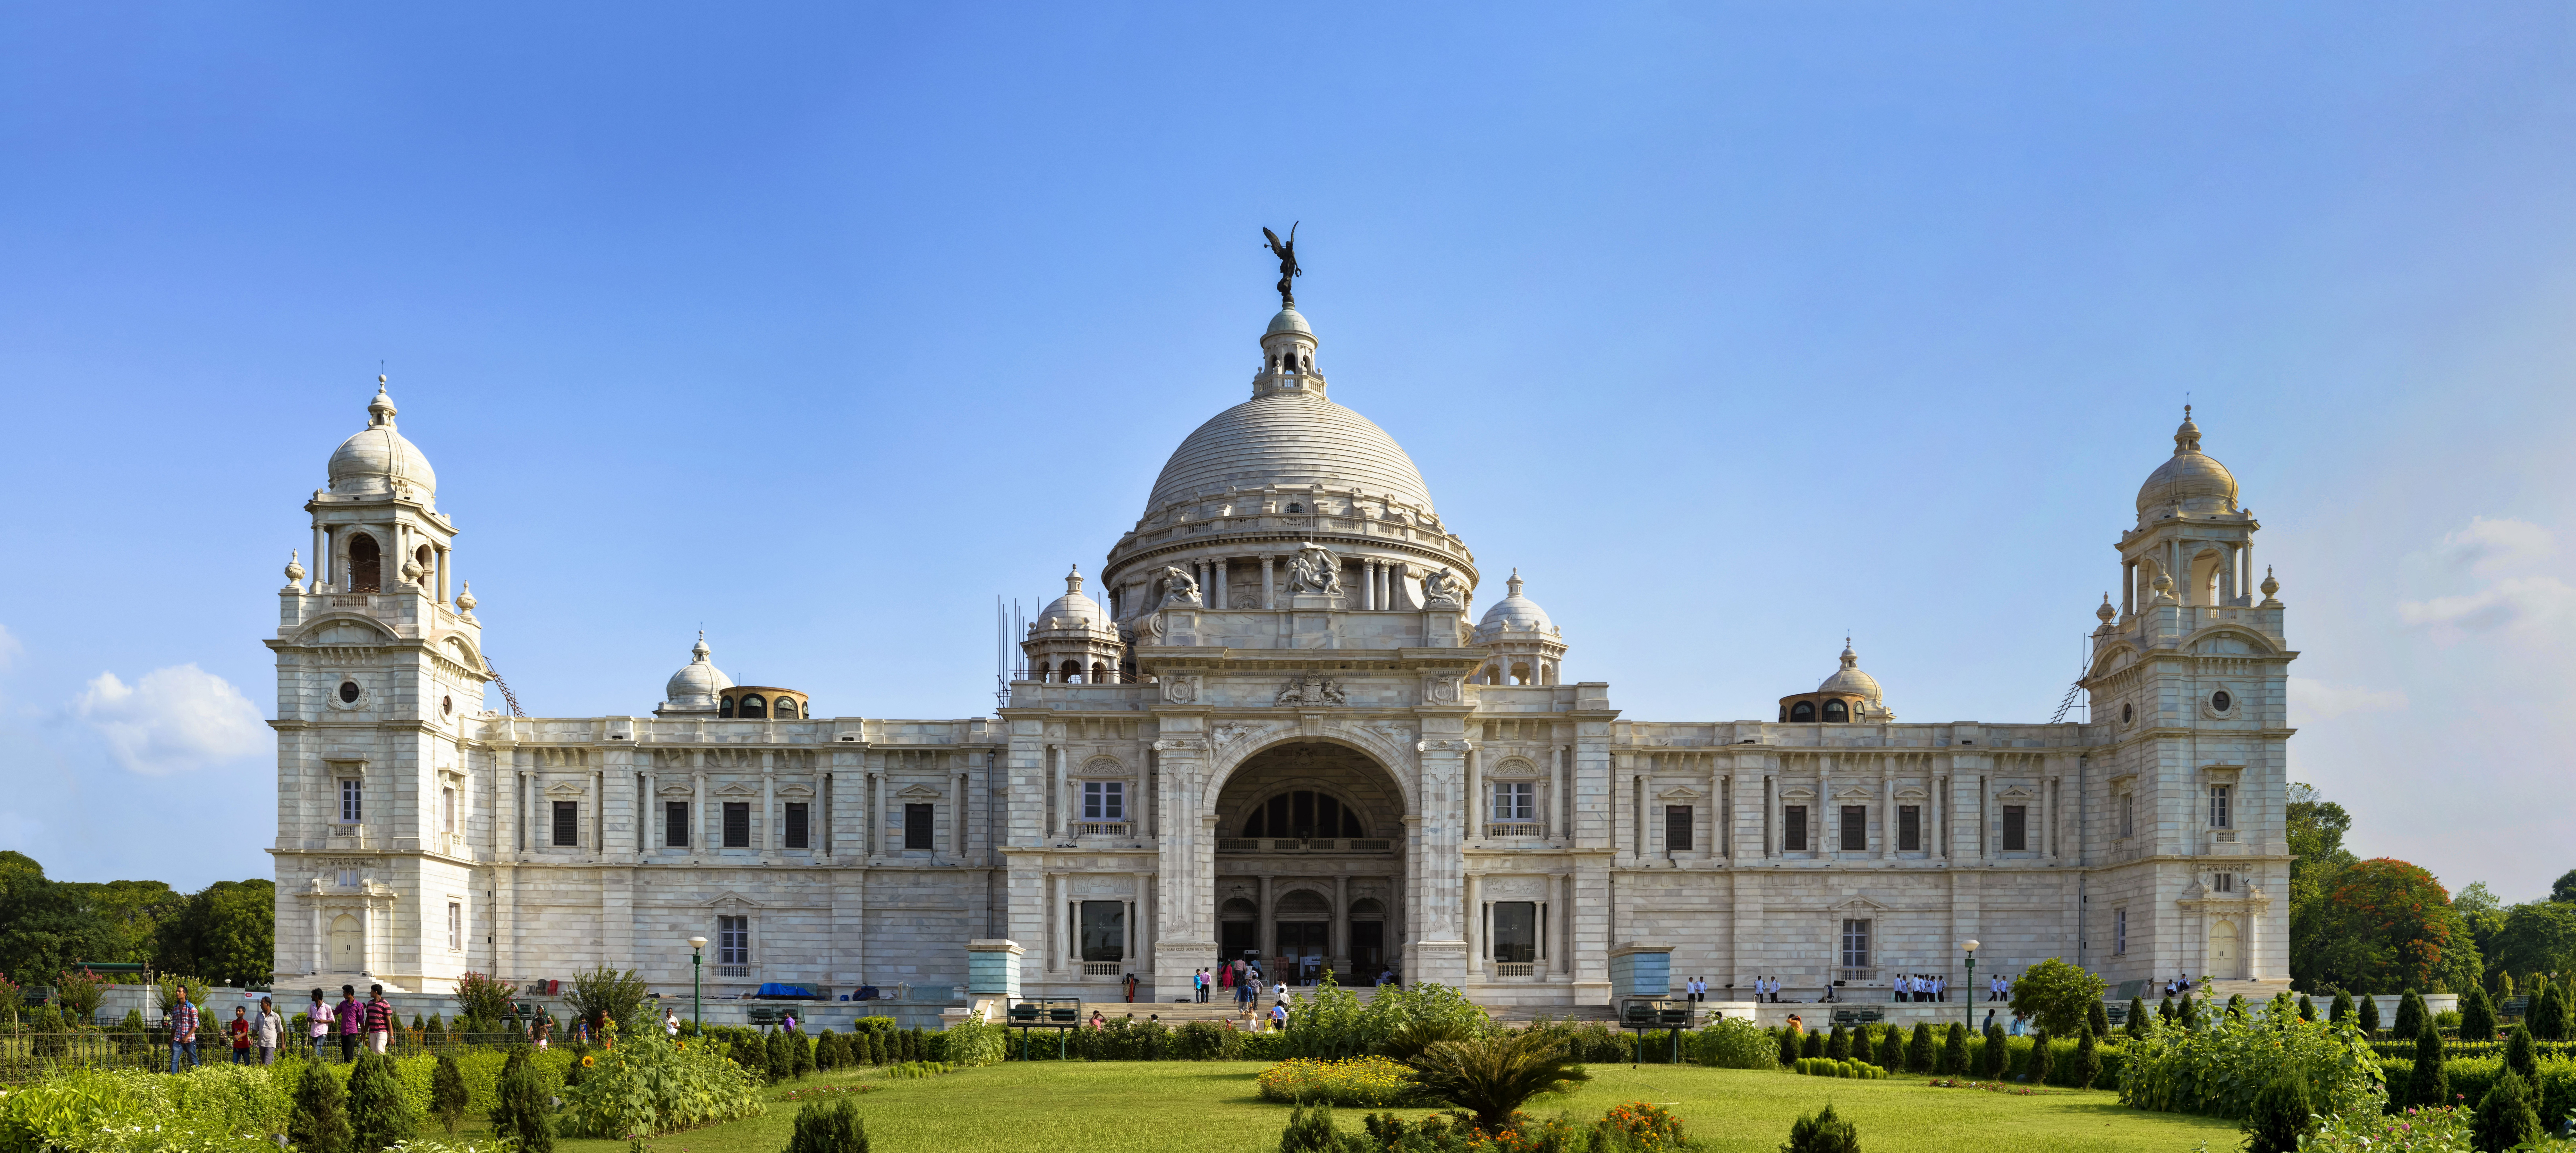 Victoria Memorial, Kolkata - Wikipedia